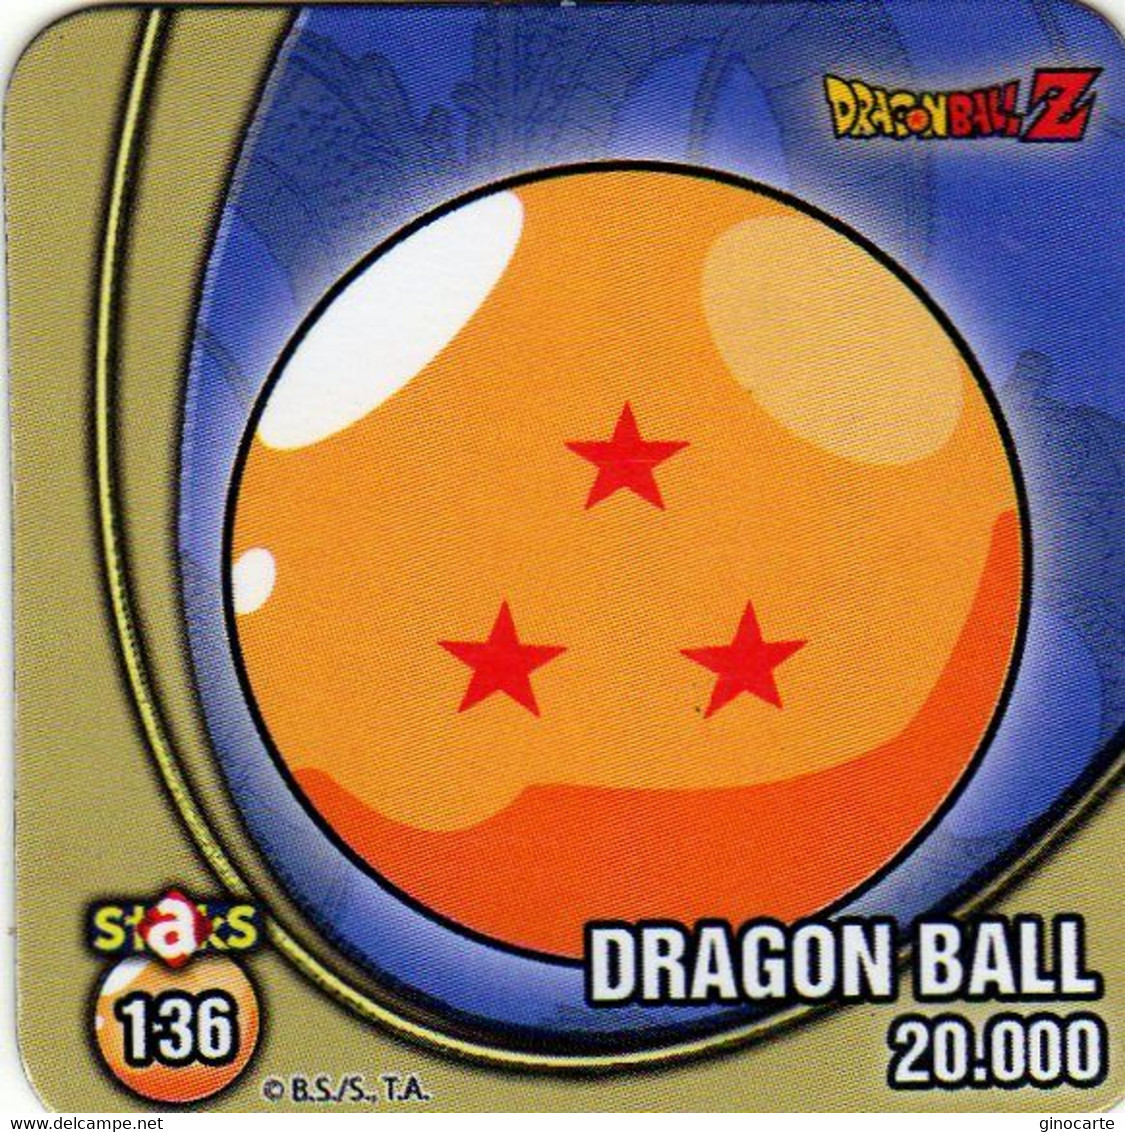 Magnets Magnet Stacks Dragon Ball Dragonball 136 - Characters